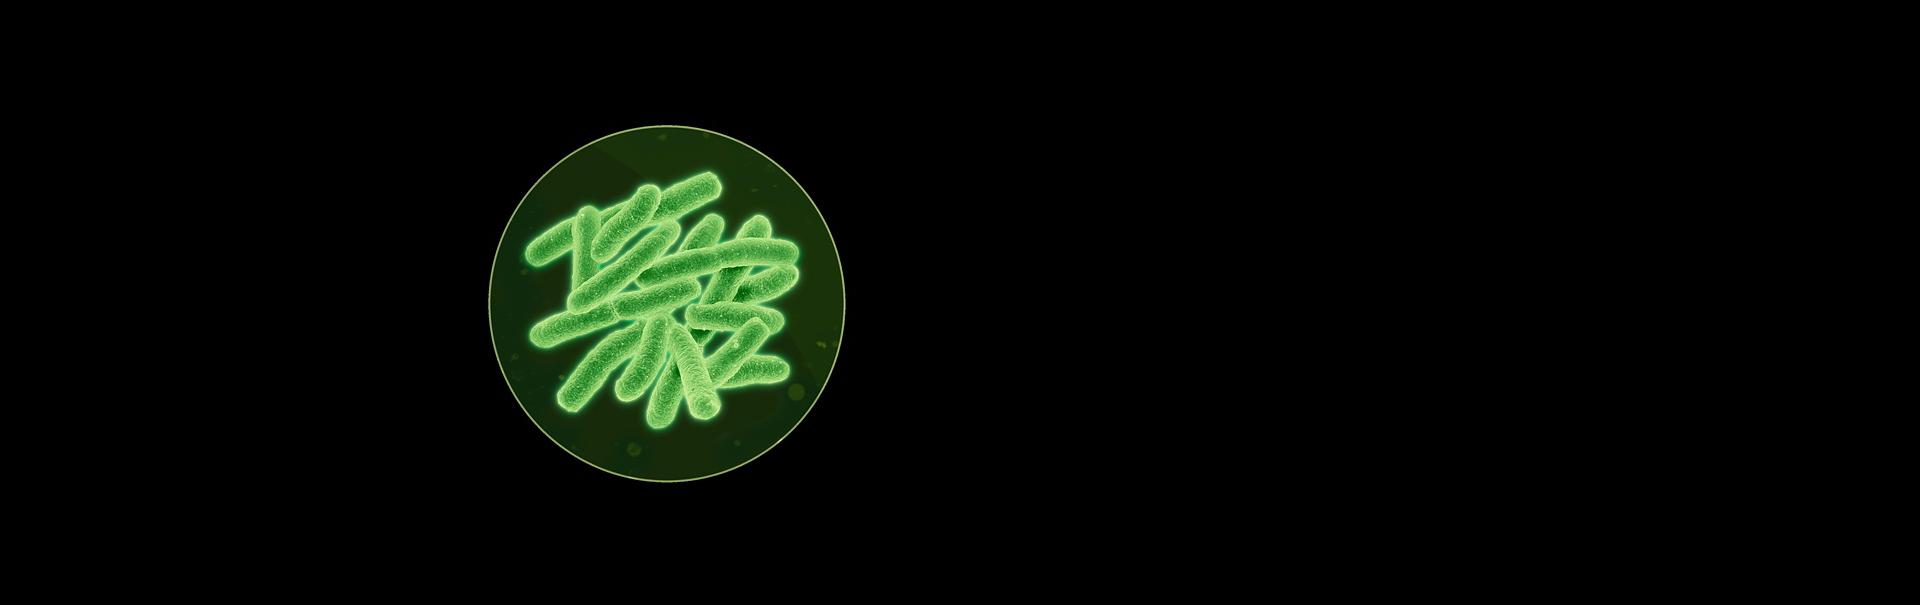 Obrázek bakterie pod mikroskopem